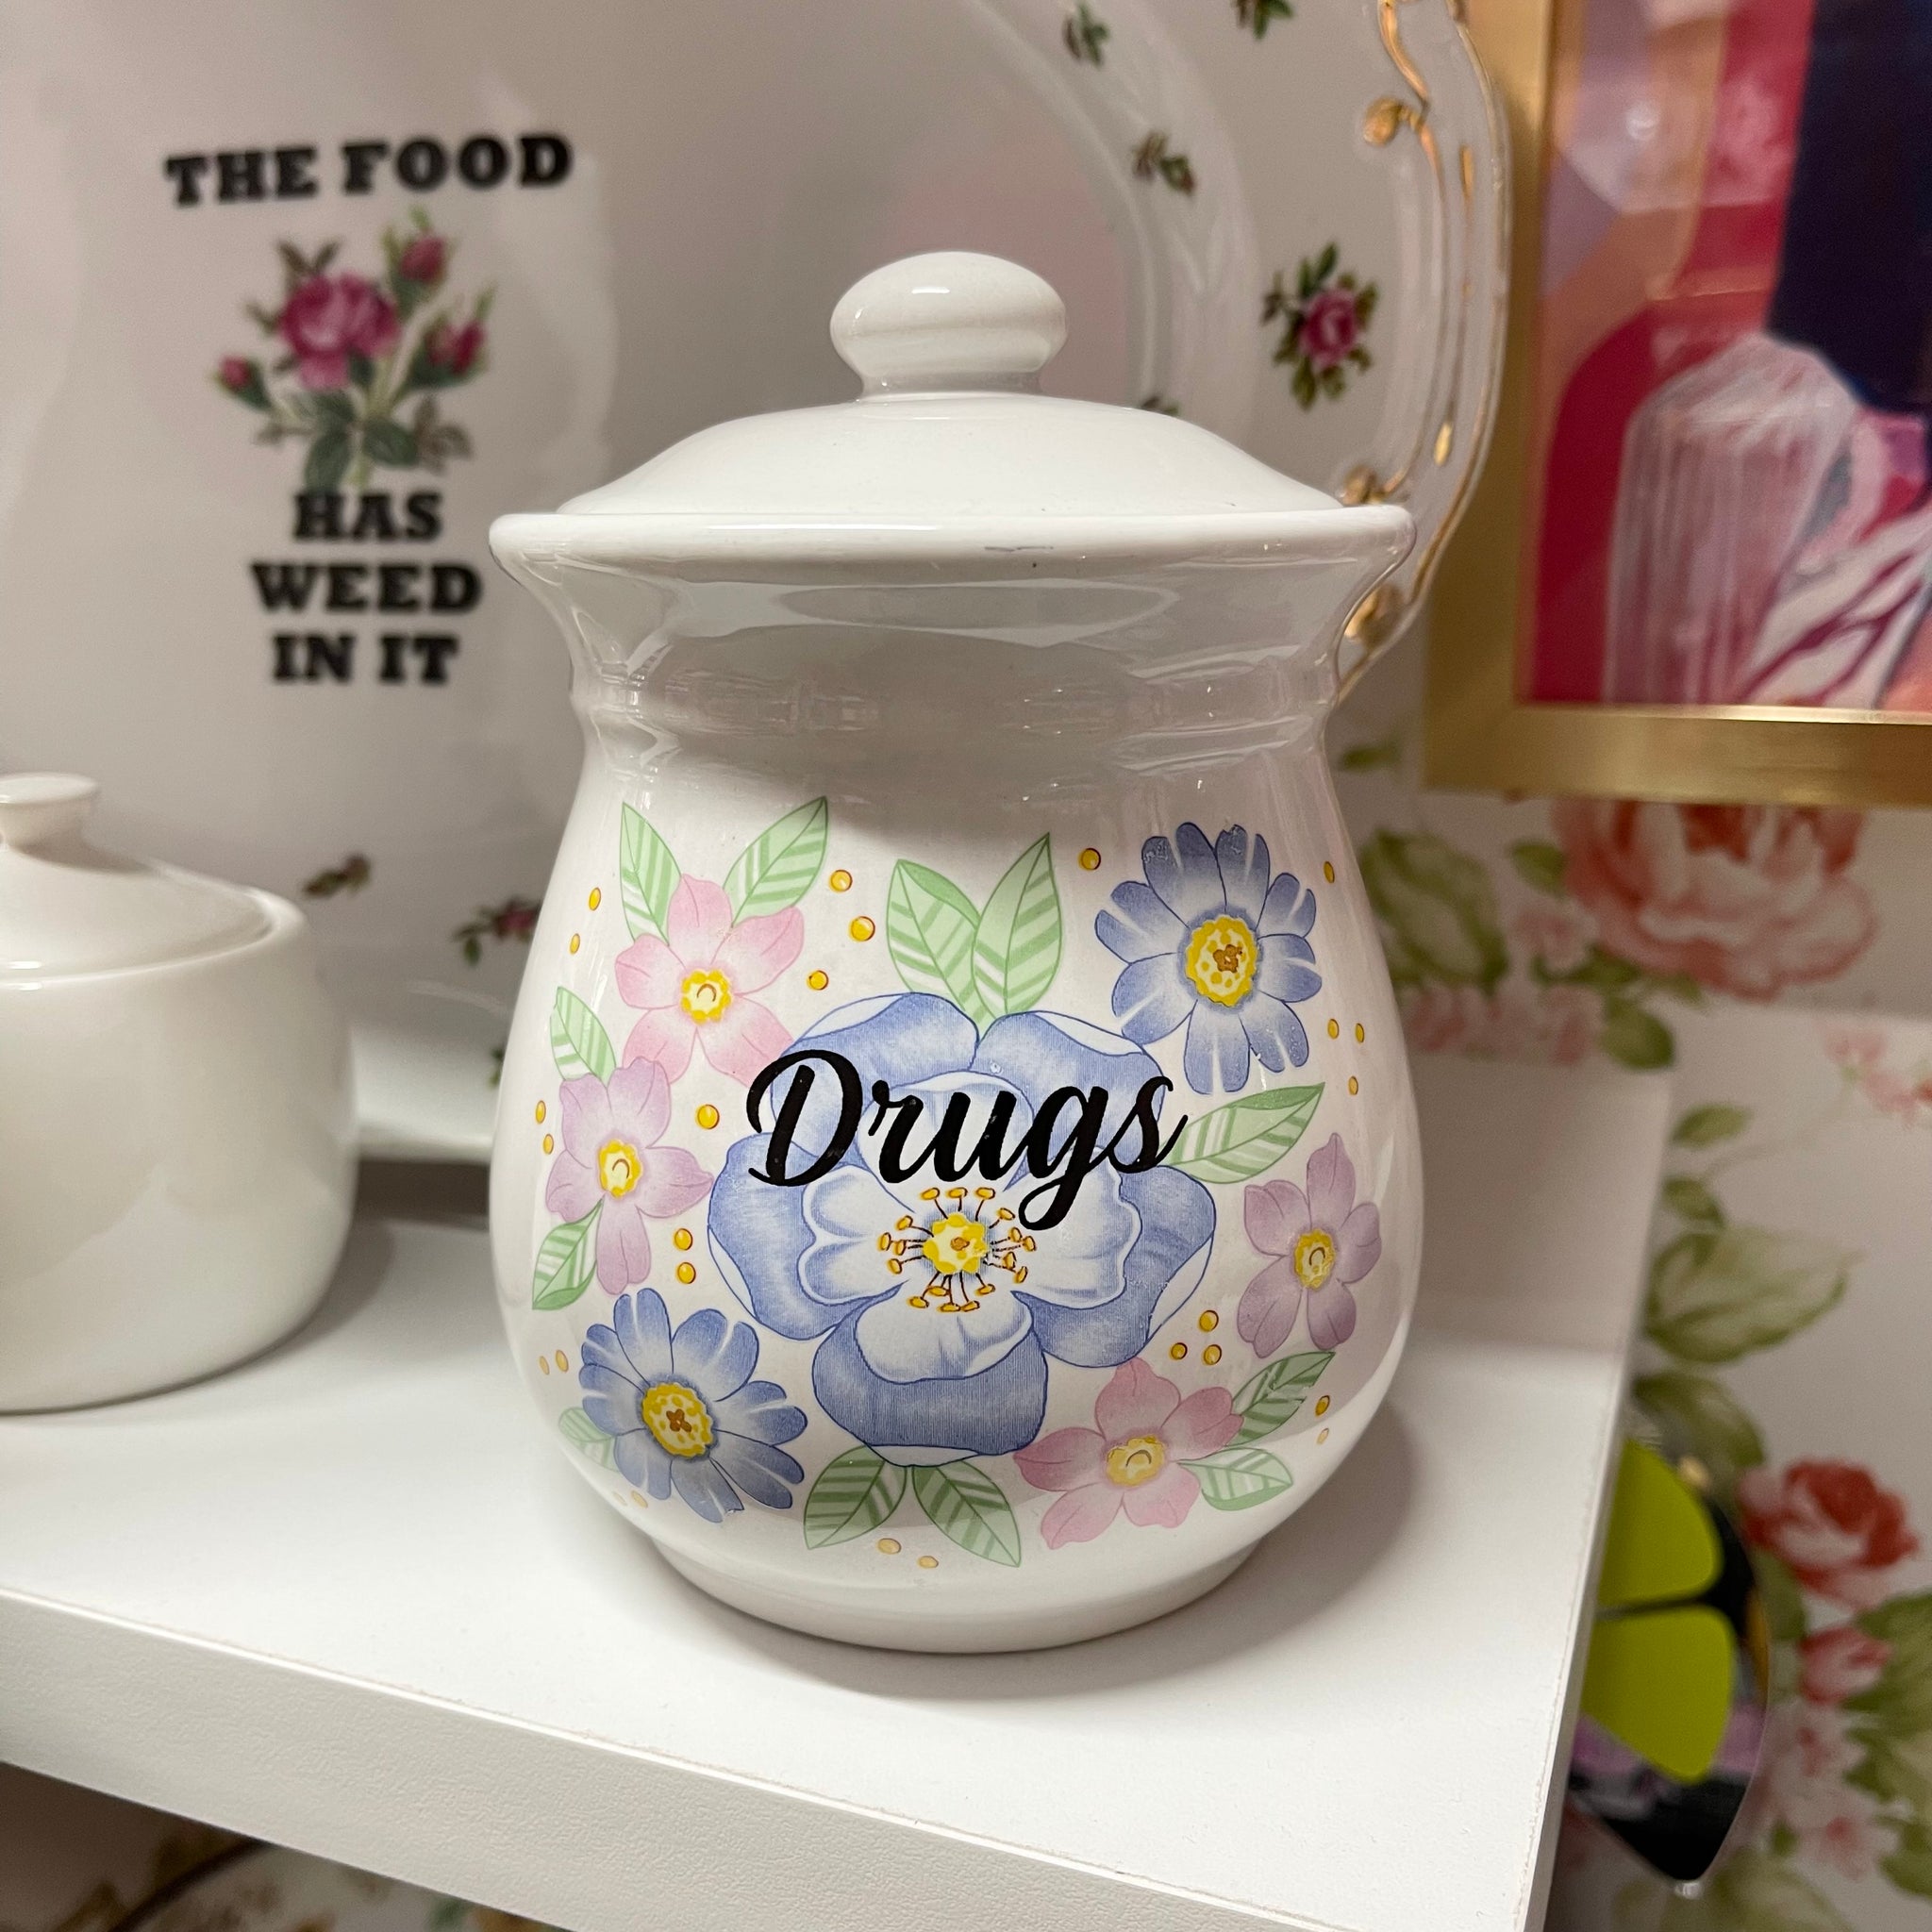 D*ugs Vintage Sugar/Stash Jar